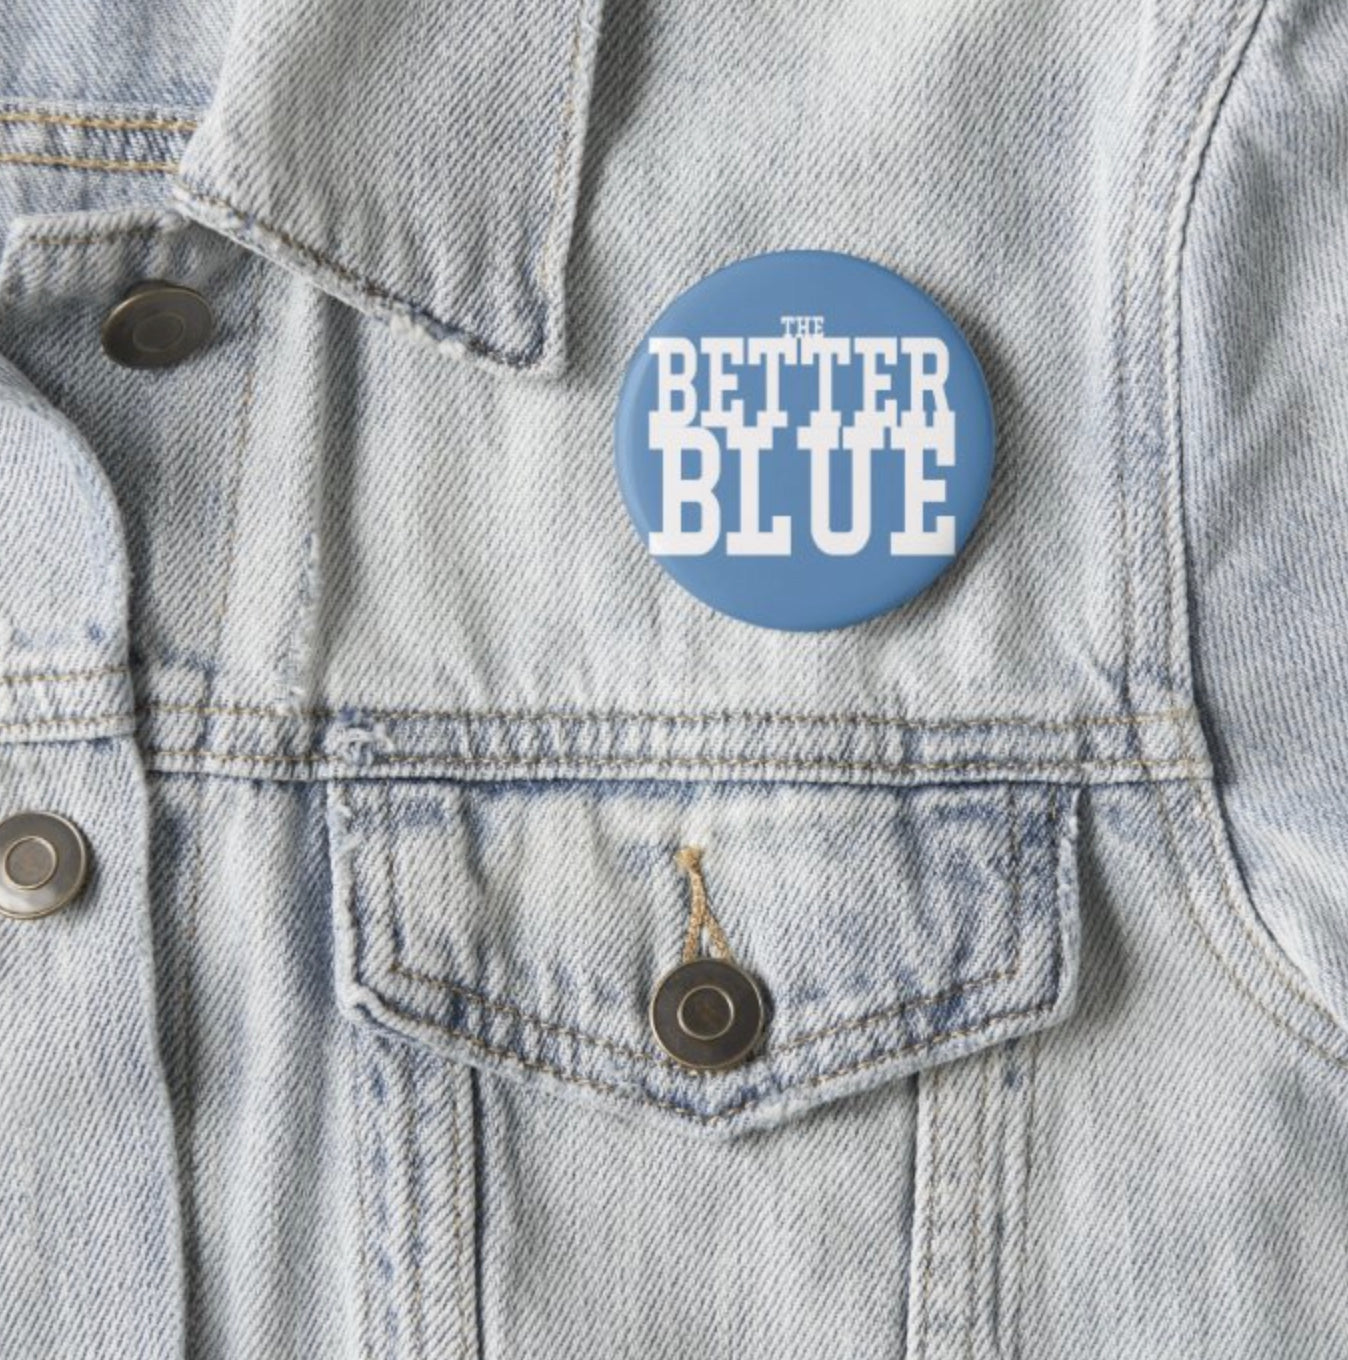 Better Blue Button Pin in Carolina Blue by Shrunken Head Brand